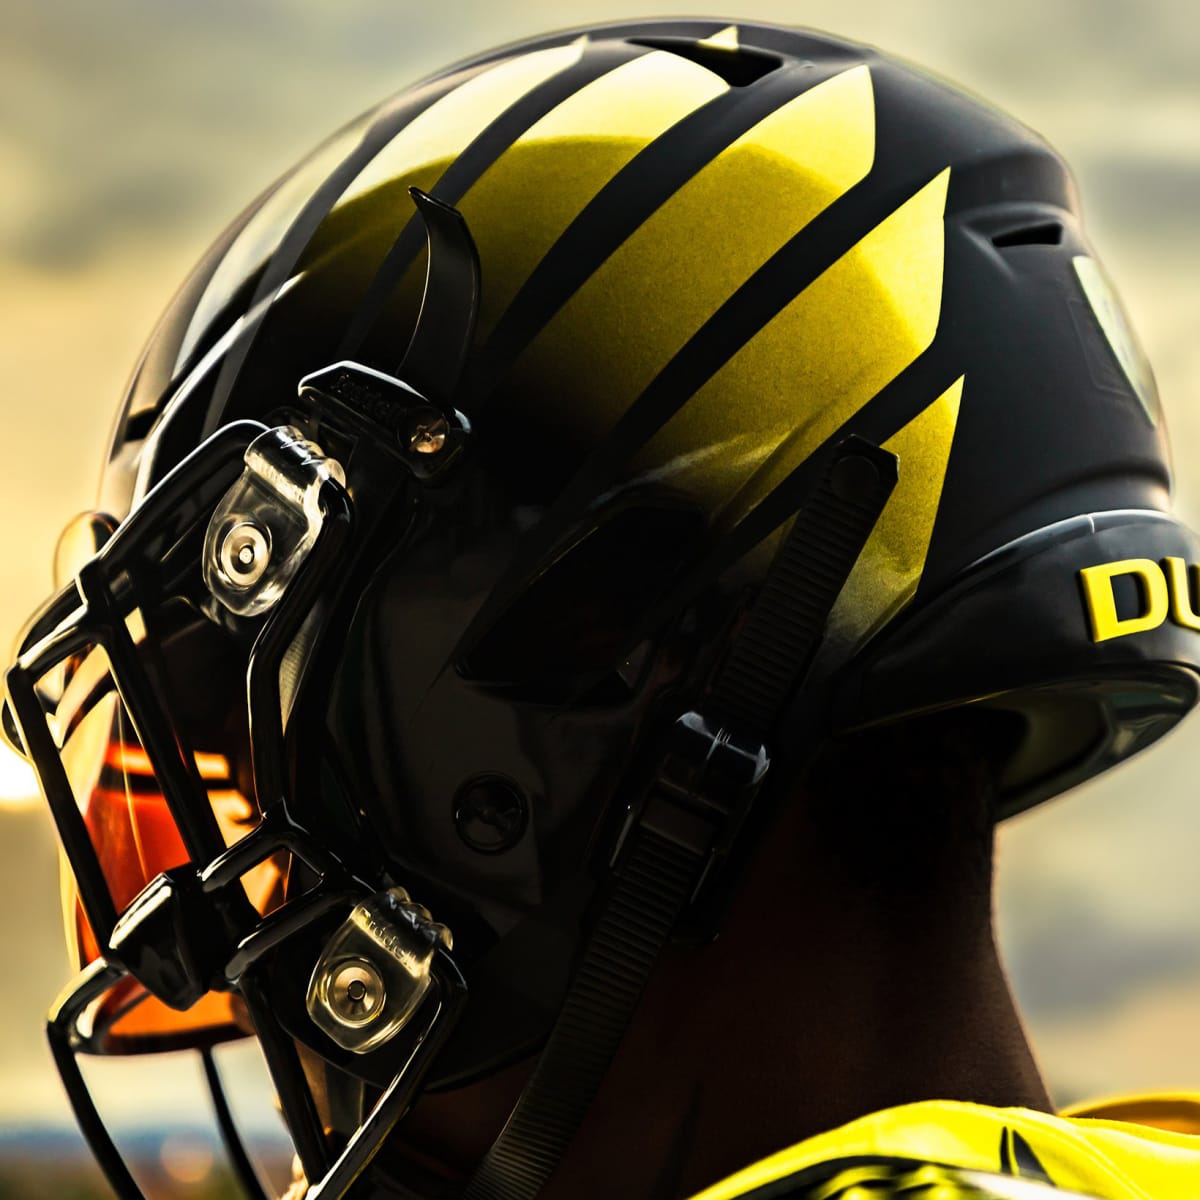 Yellow uniforms with black/fierce Duck logo helmet for Georgia